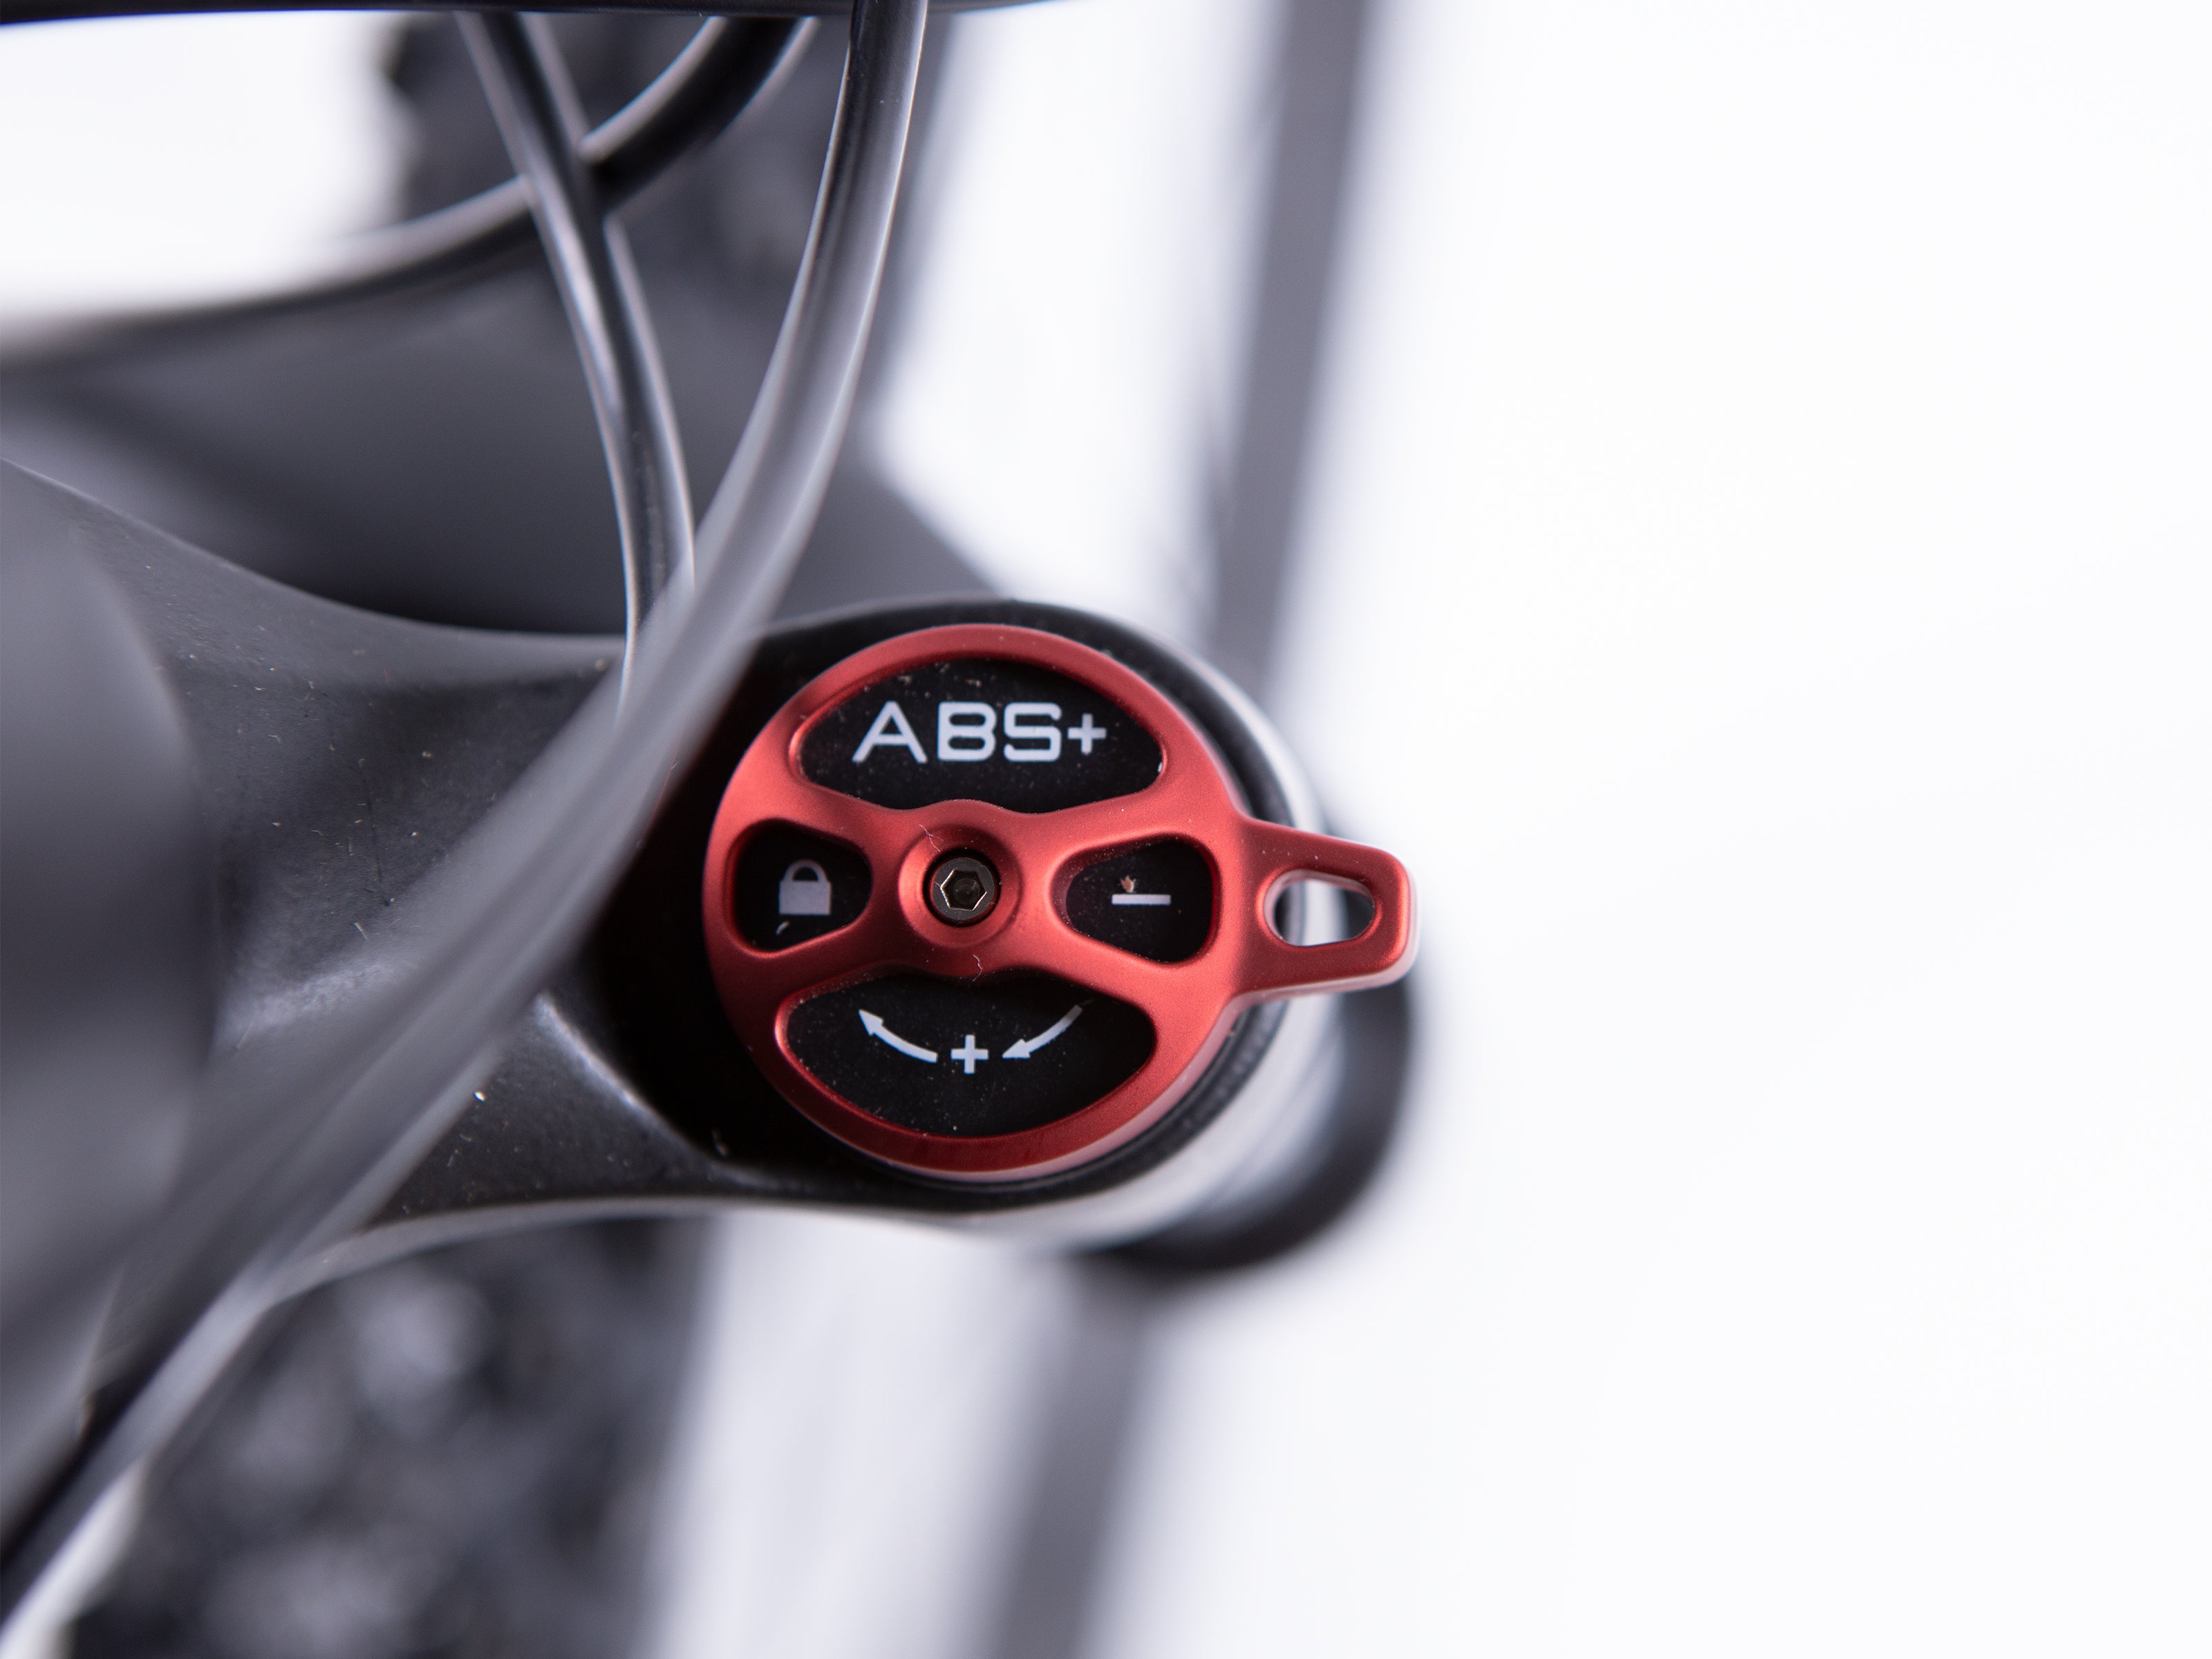 All Go Sport - Carbon Fiber Electric Bike